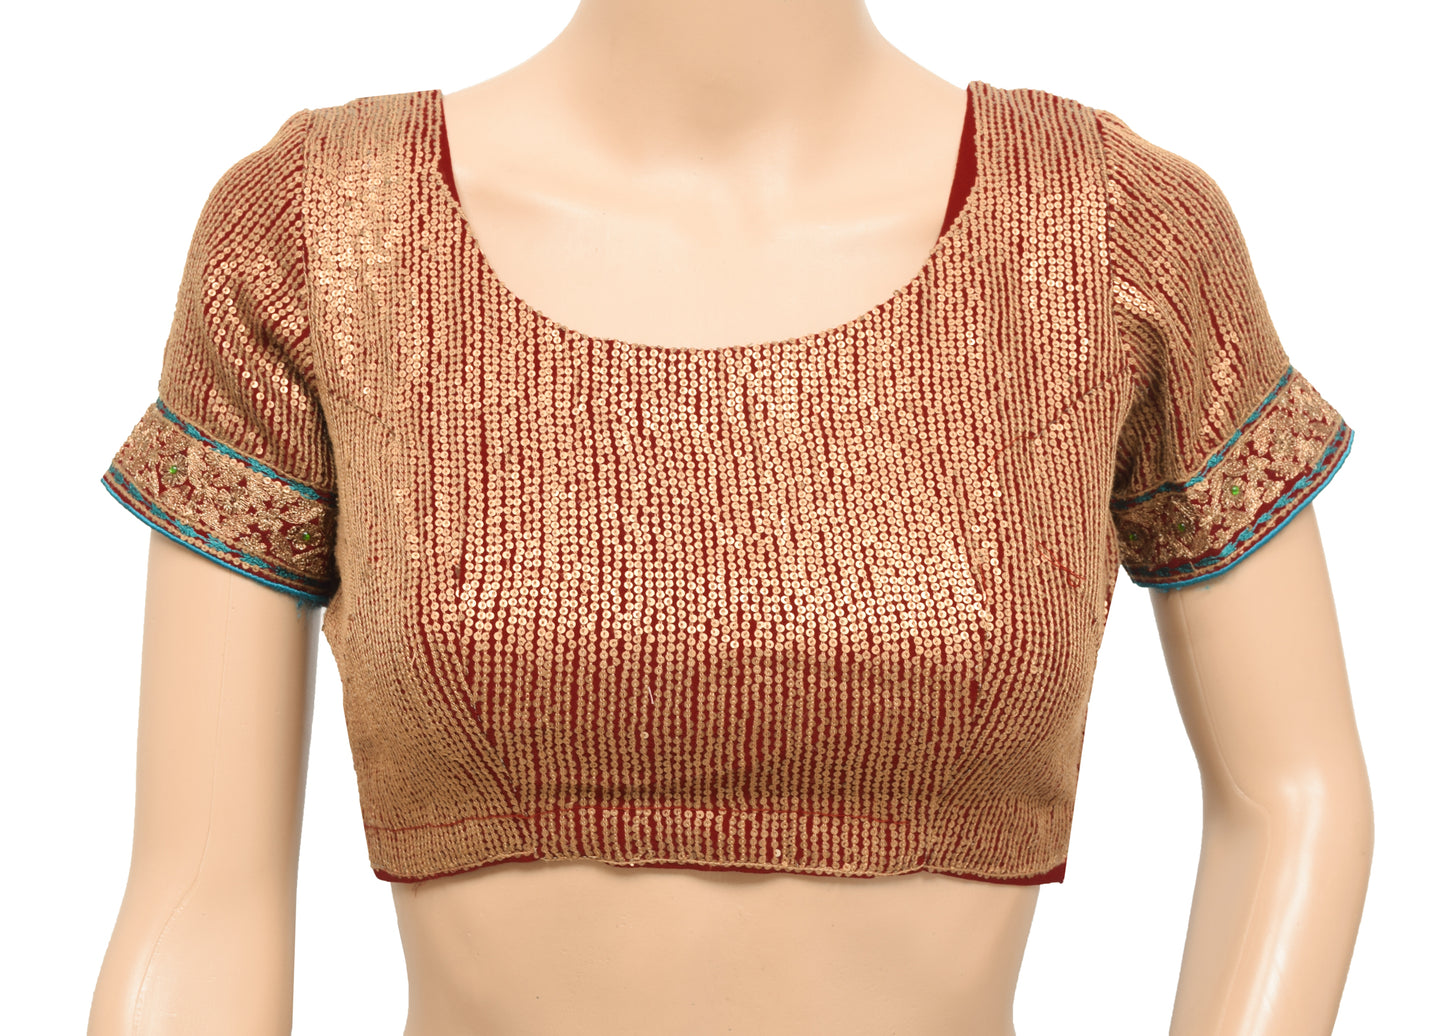 Sushila Vintage Stitched Sari Blouse Maroon Sequins Embroidered Designer Top